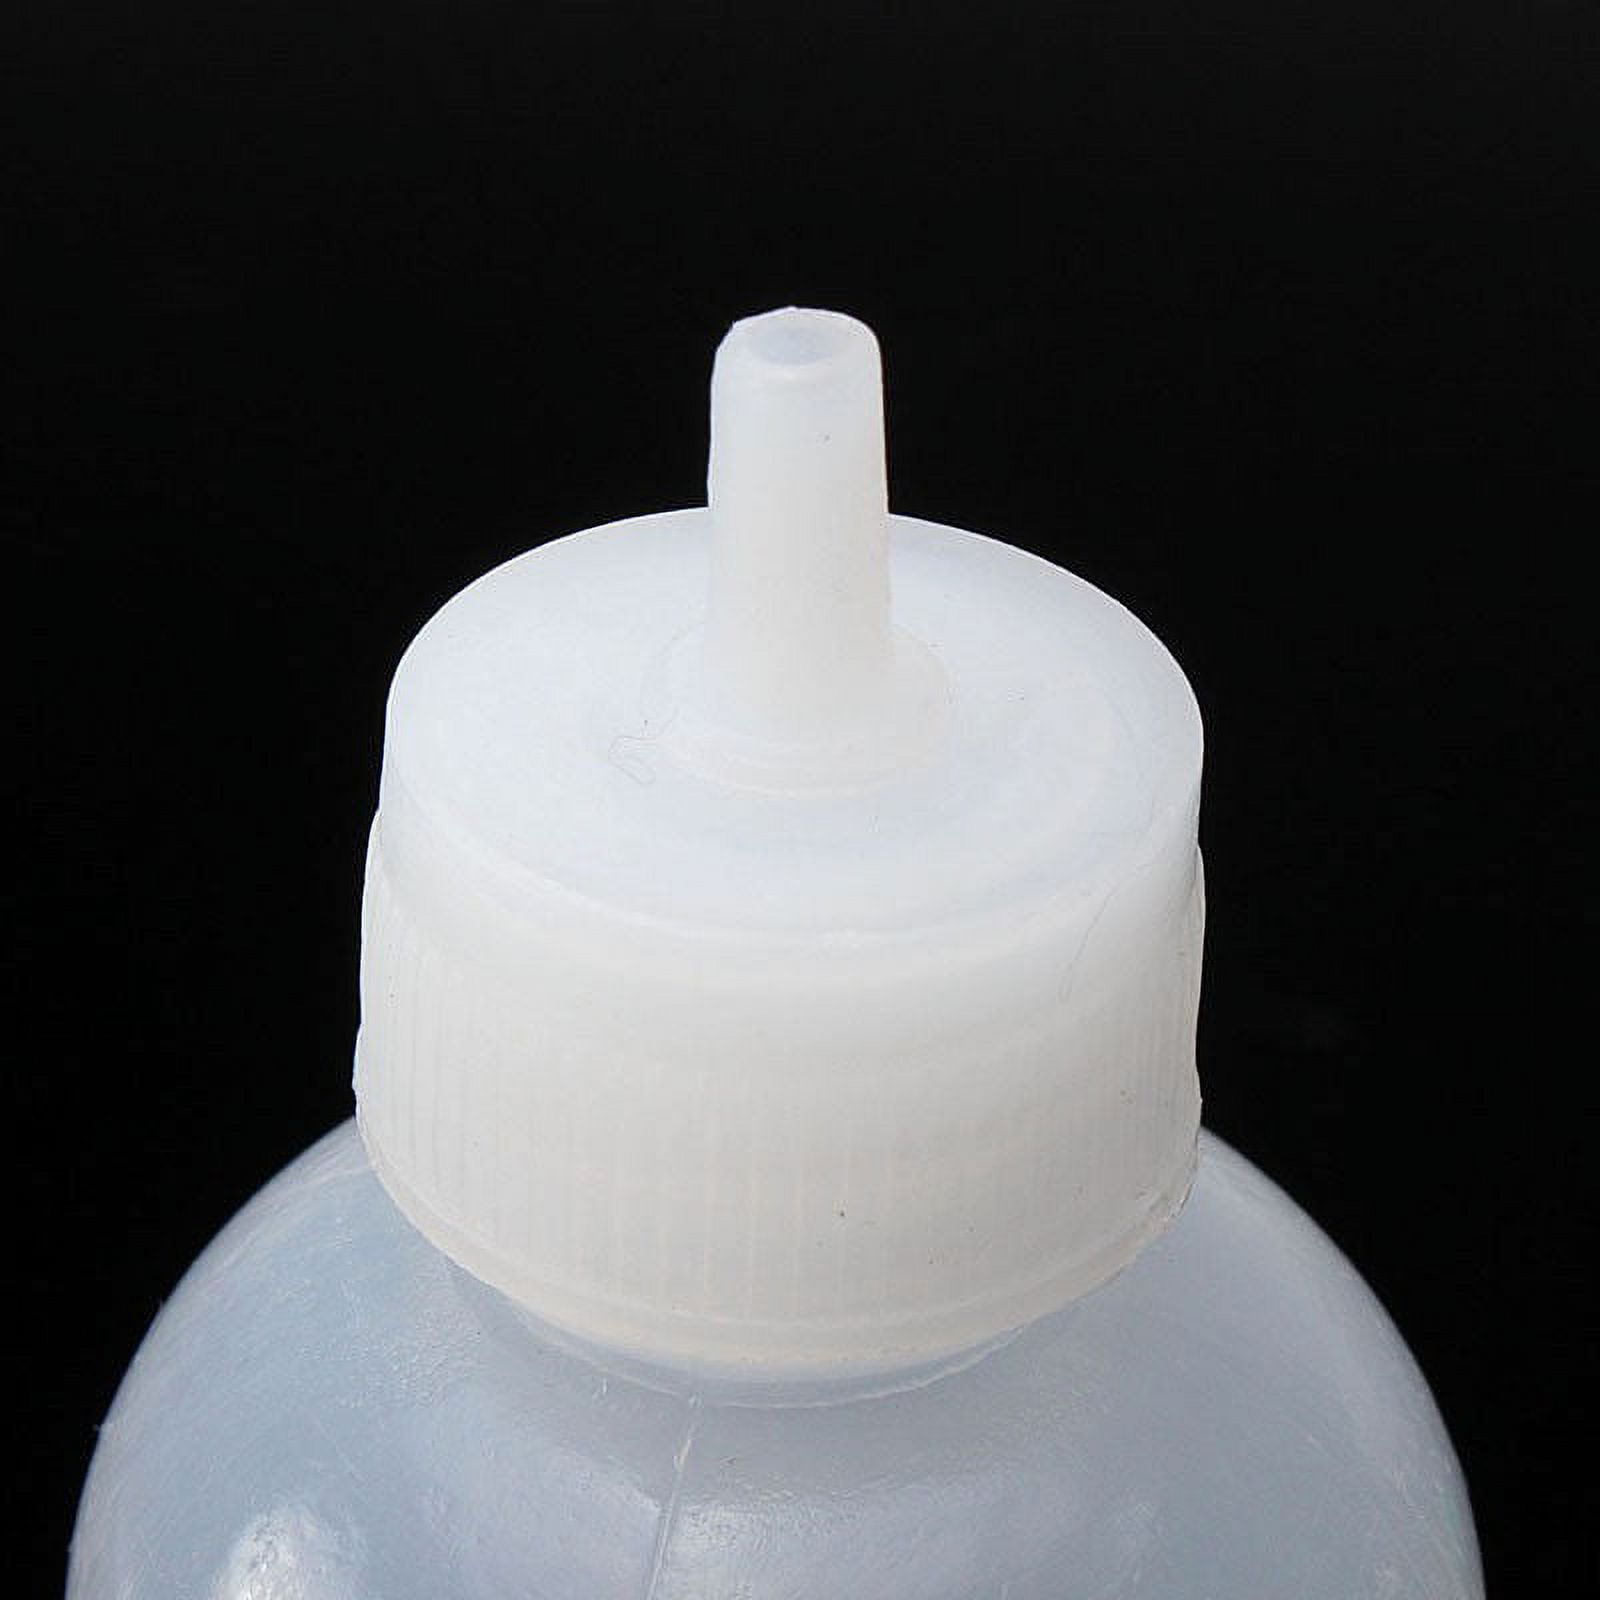 EconoCrafts: Plastic Squeeze Bottles